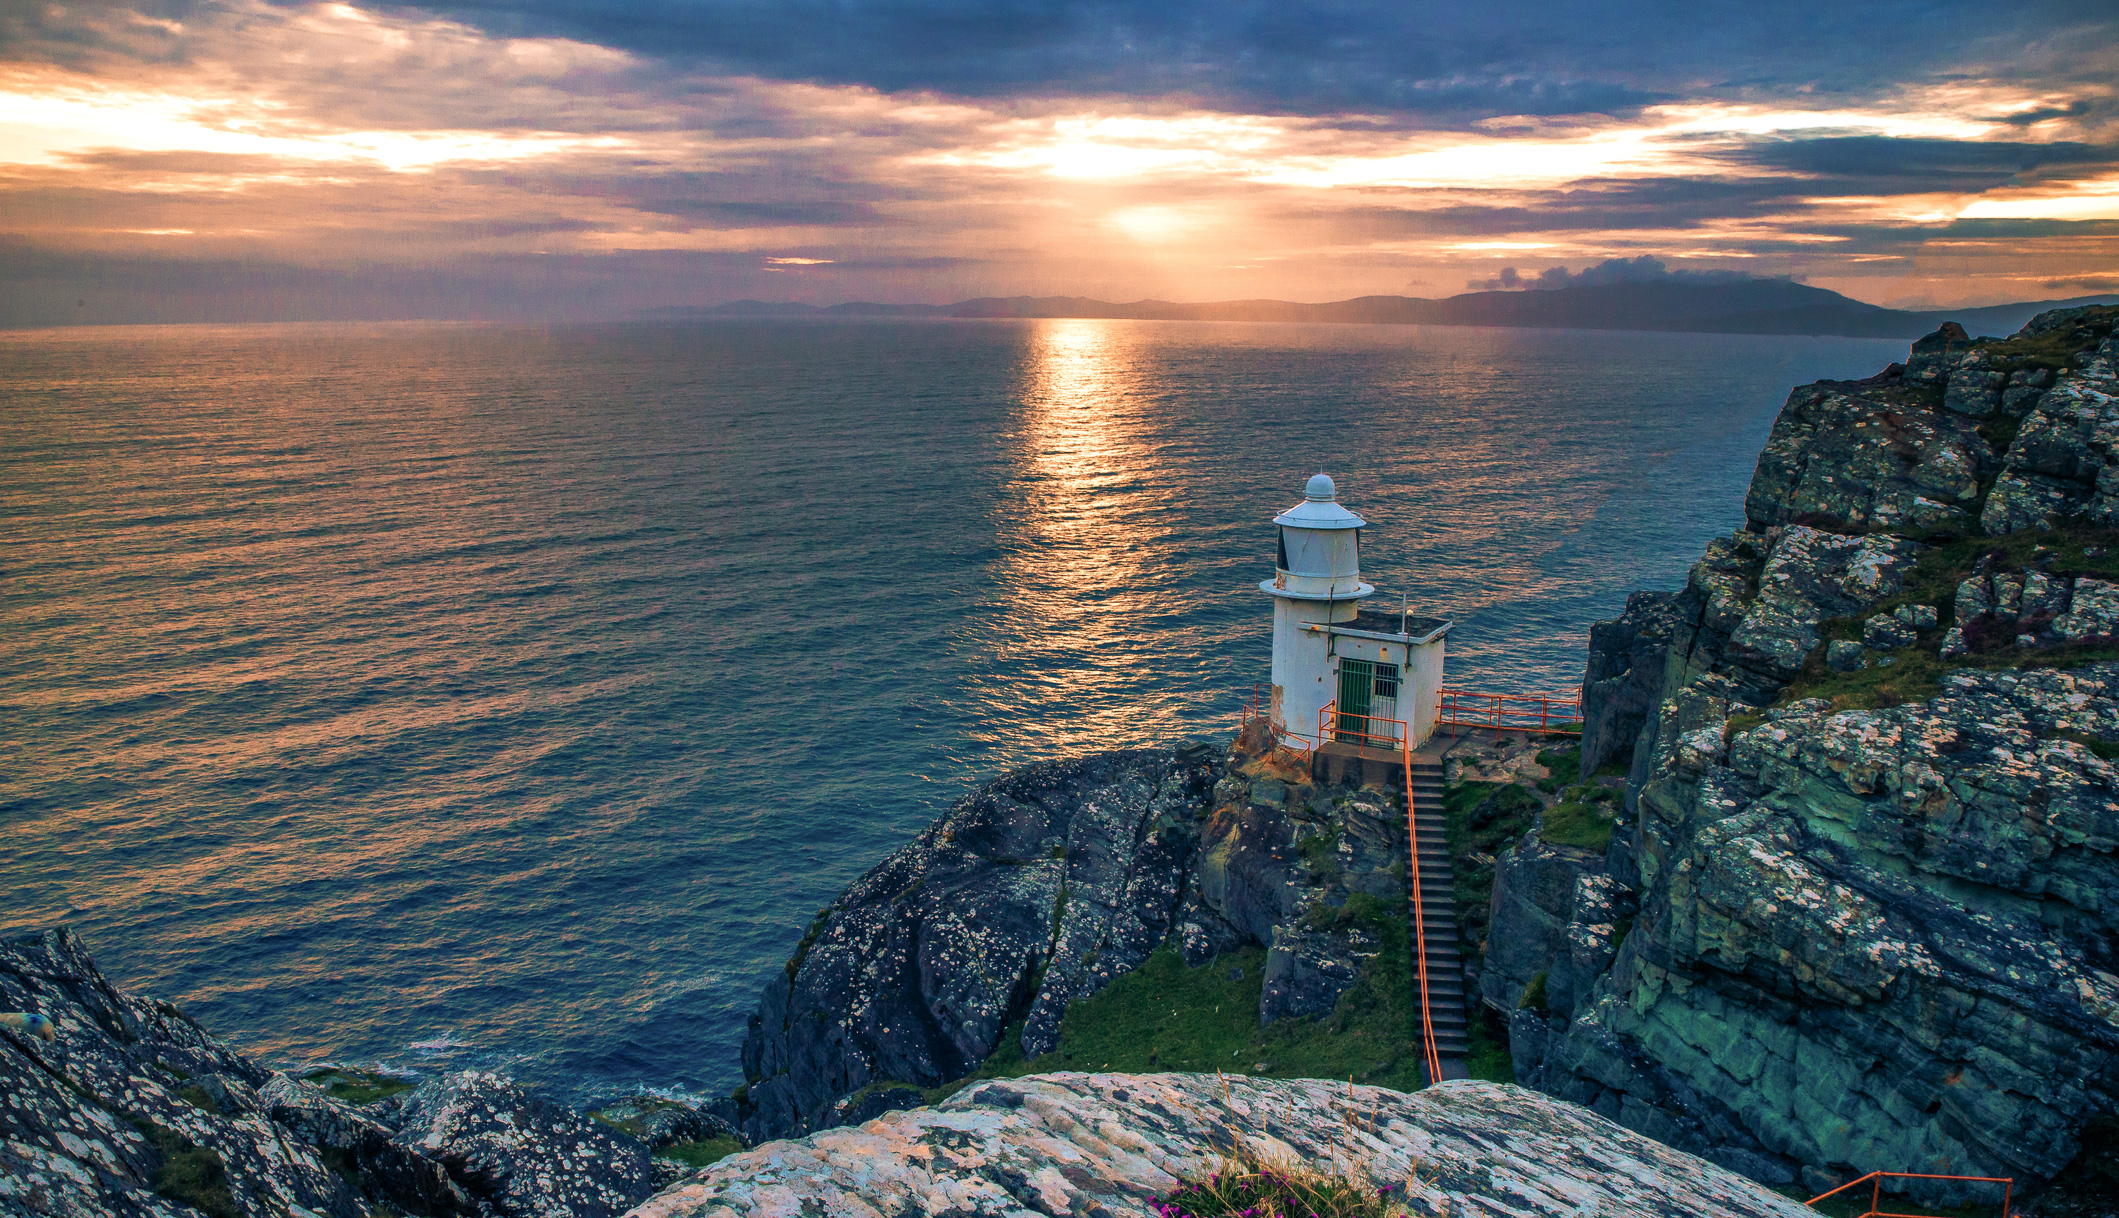 The Sheeps Head Peninsula Lighthouse